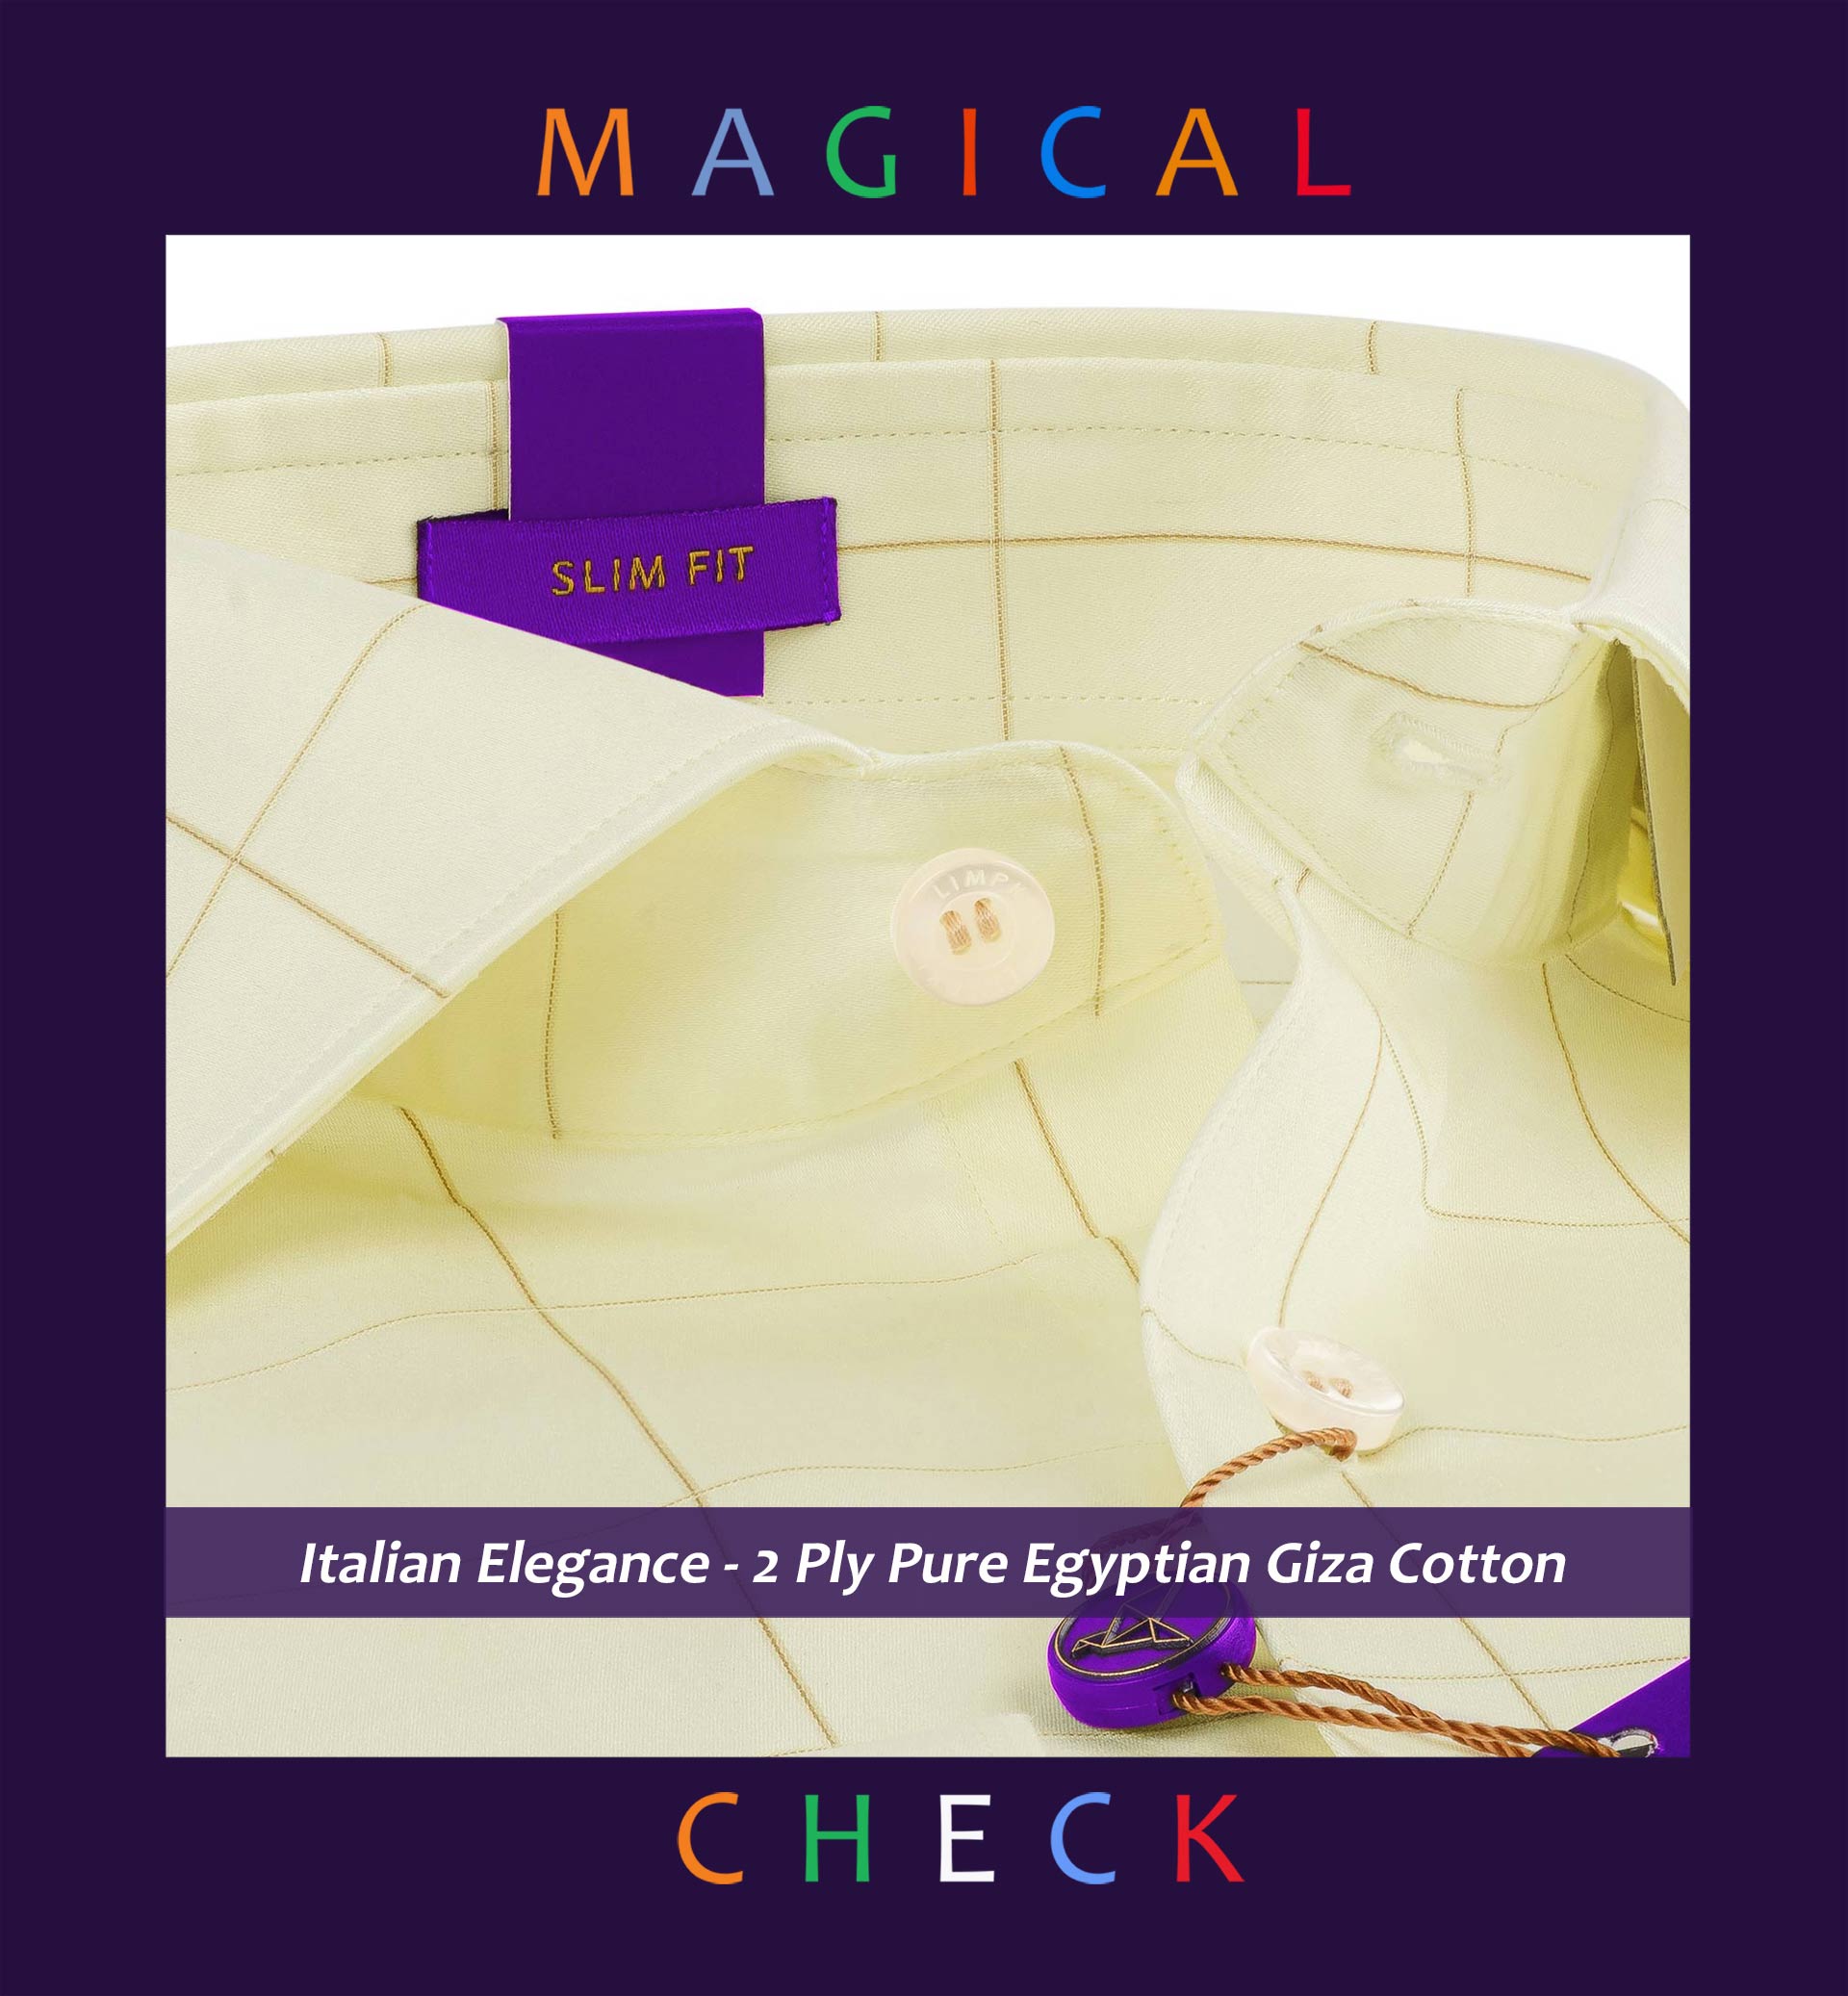 Chester- Cream & Beige Magical Check